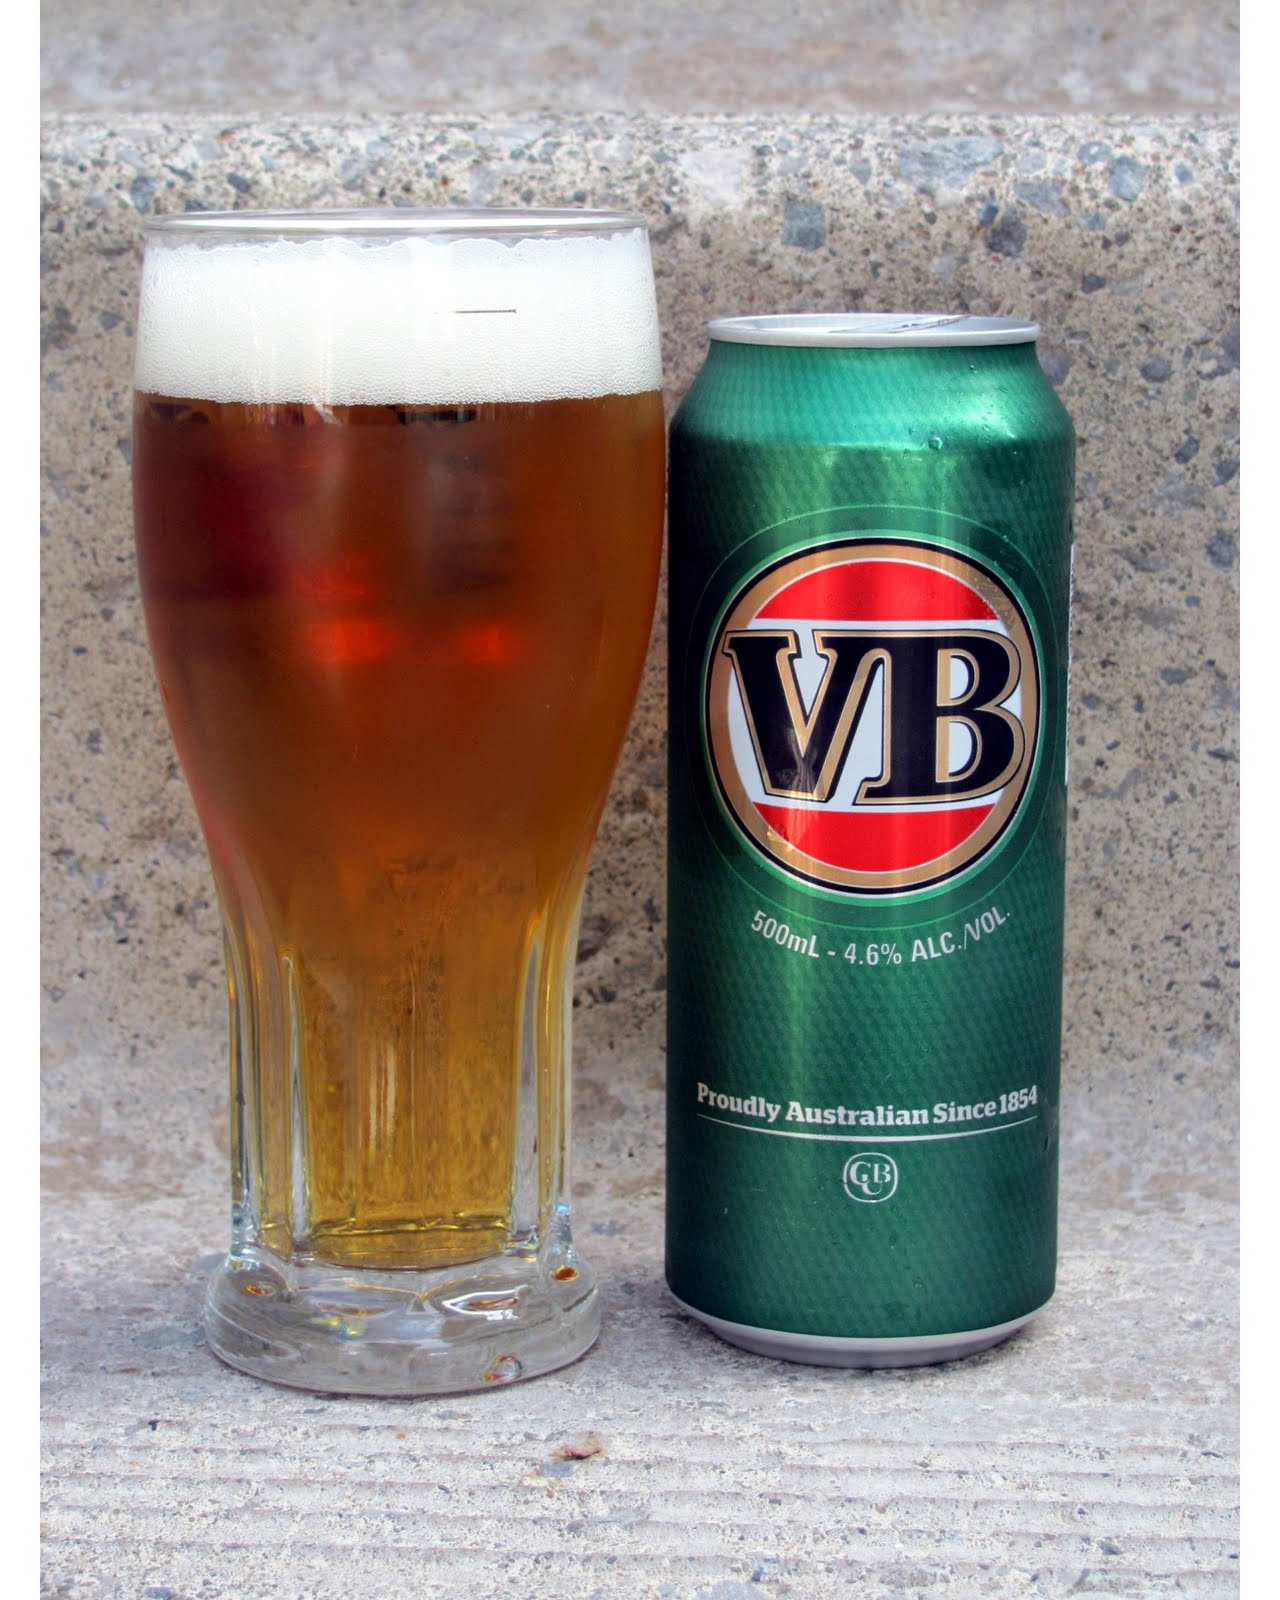 Amazing Victoria Bitter Beer Pictures & Backgrounds